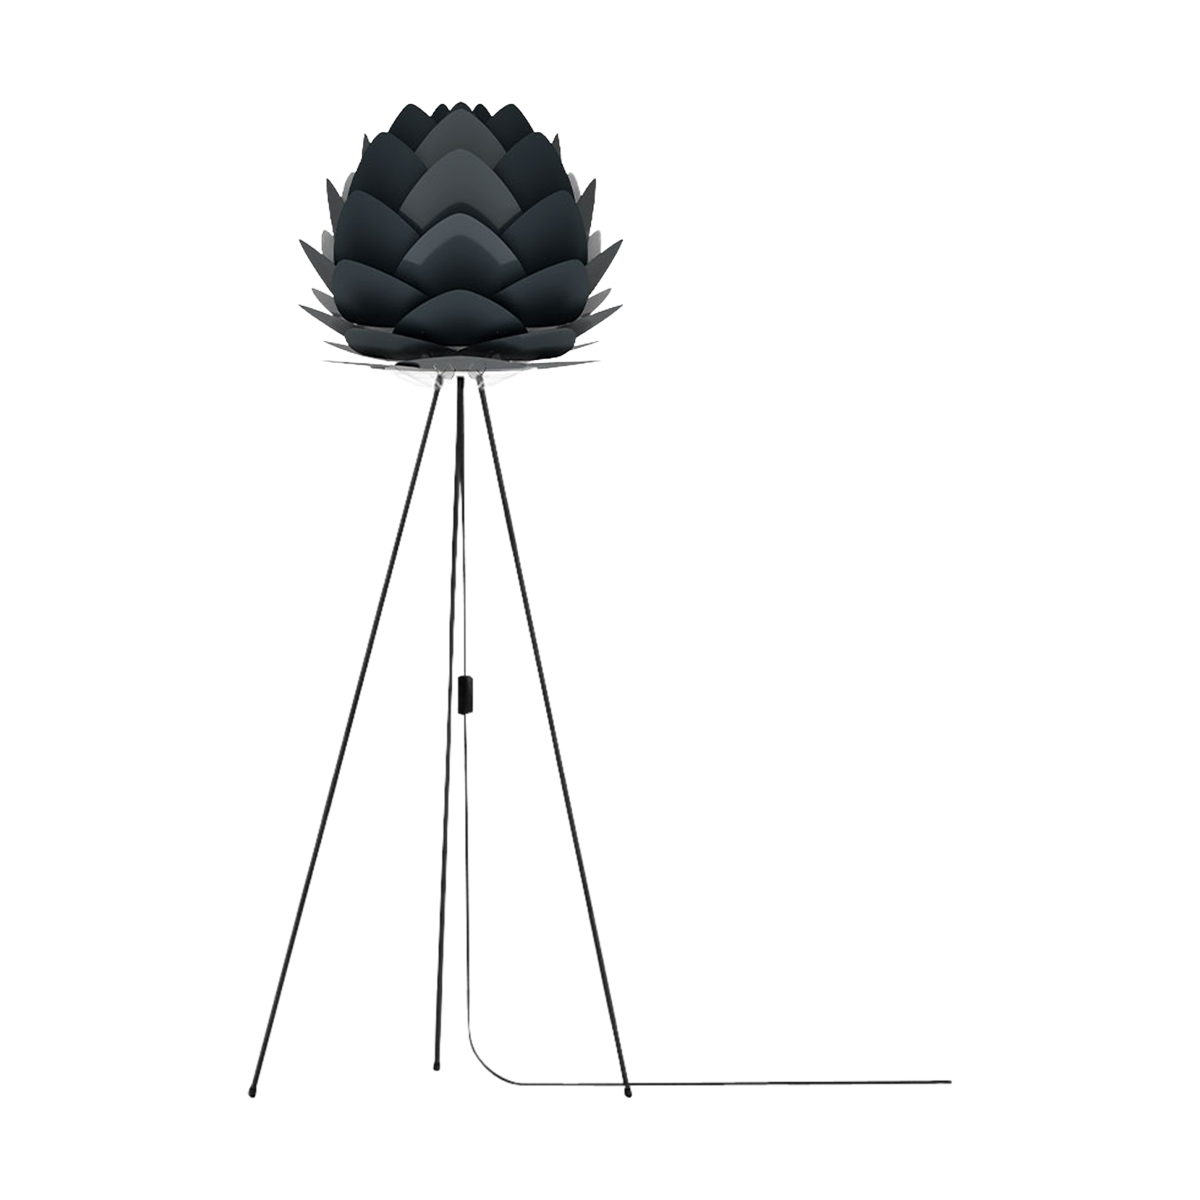 Aluvia Medium vloerlamp anthracite grey - met tripod zwart - Ø 59 cm